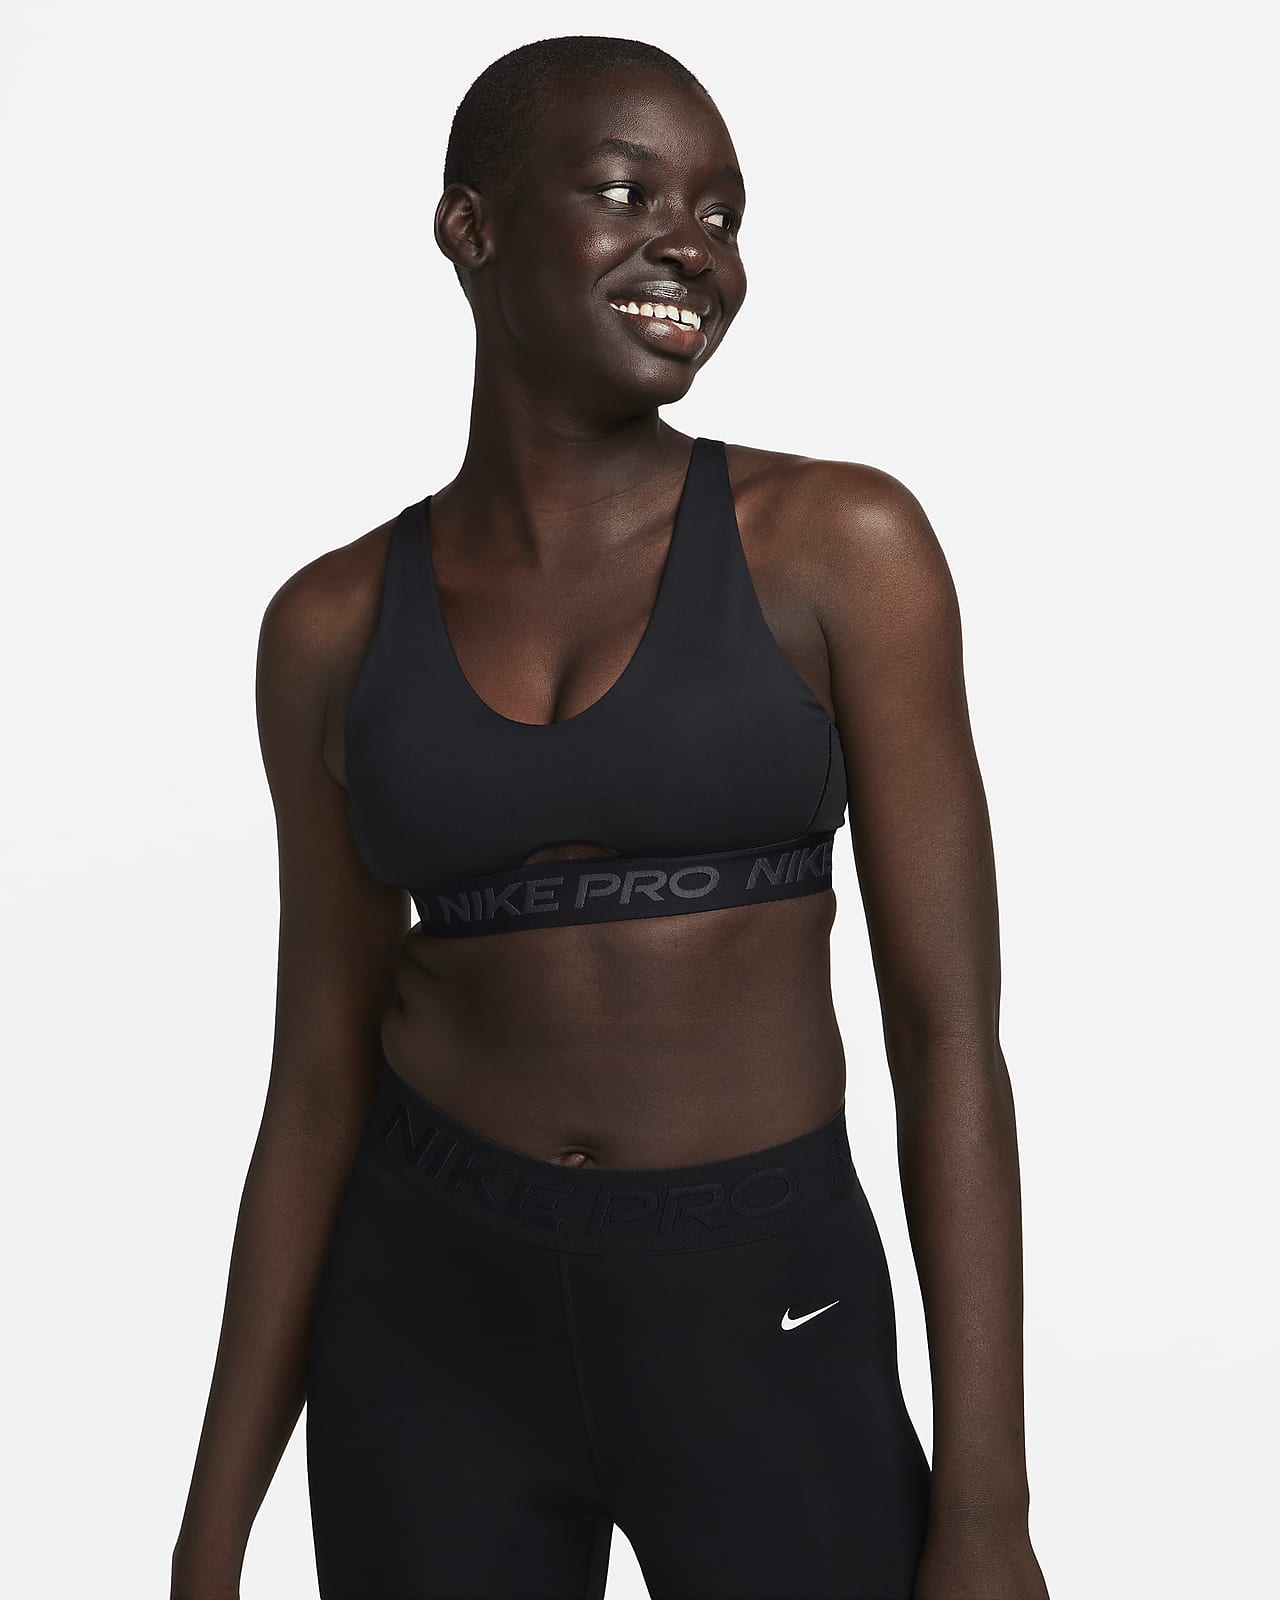 Nike Pro Indy Women's Sports Training Gym Light Support Bra DRI-FIT 